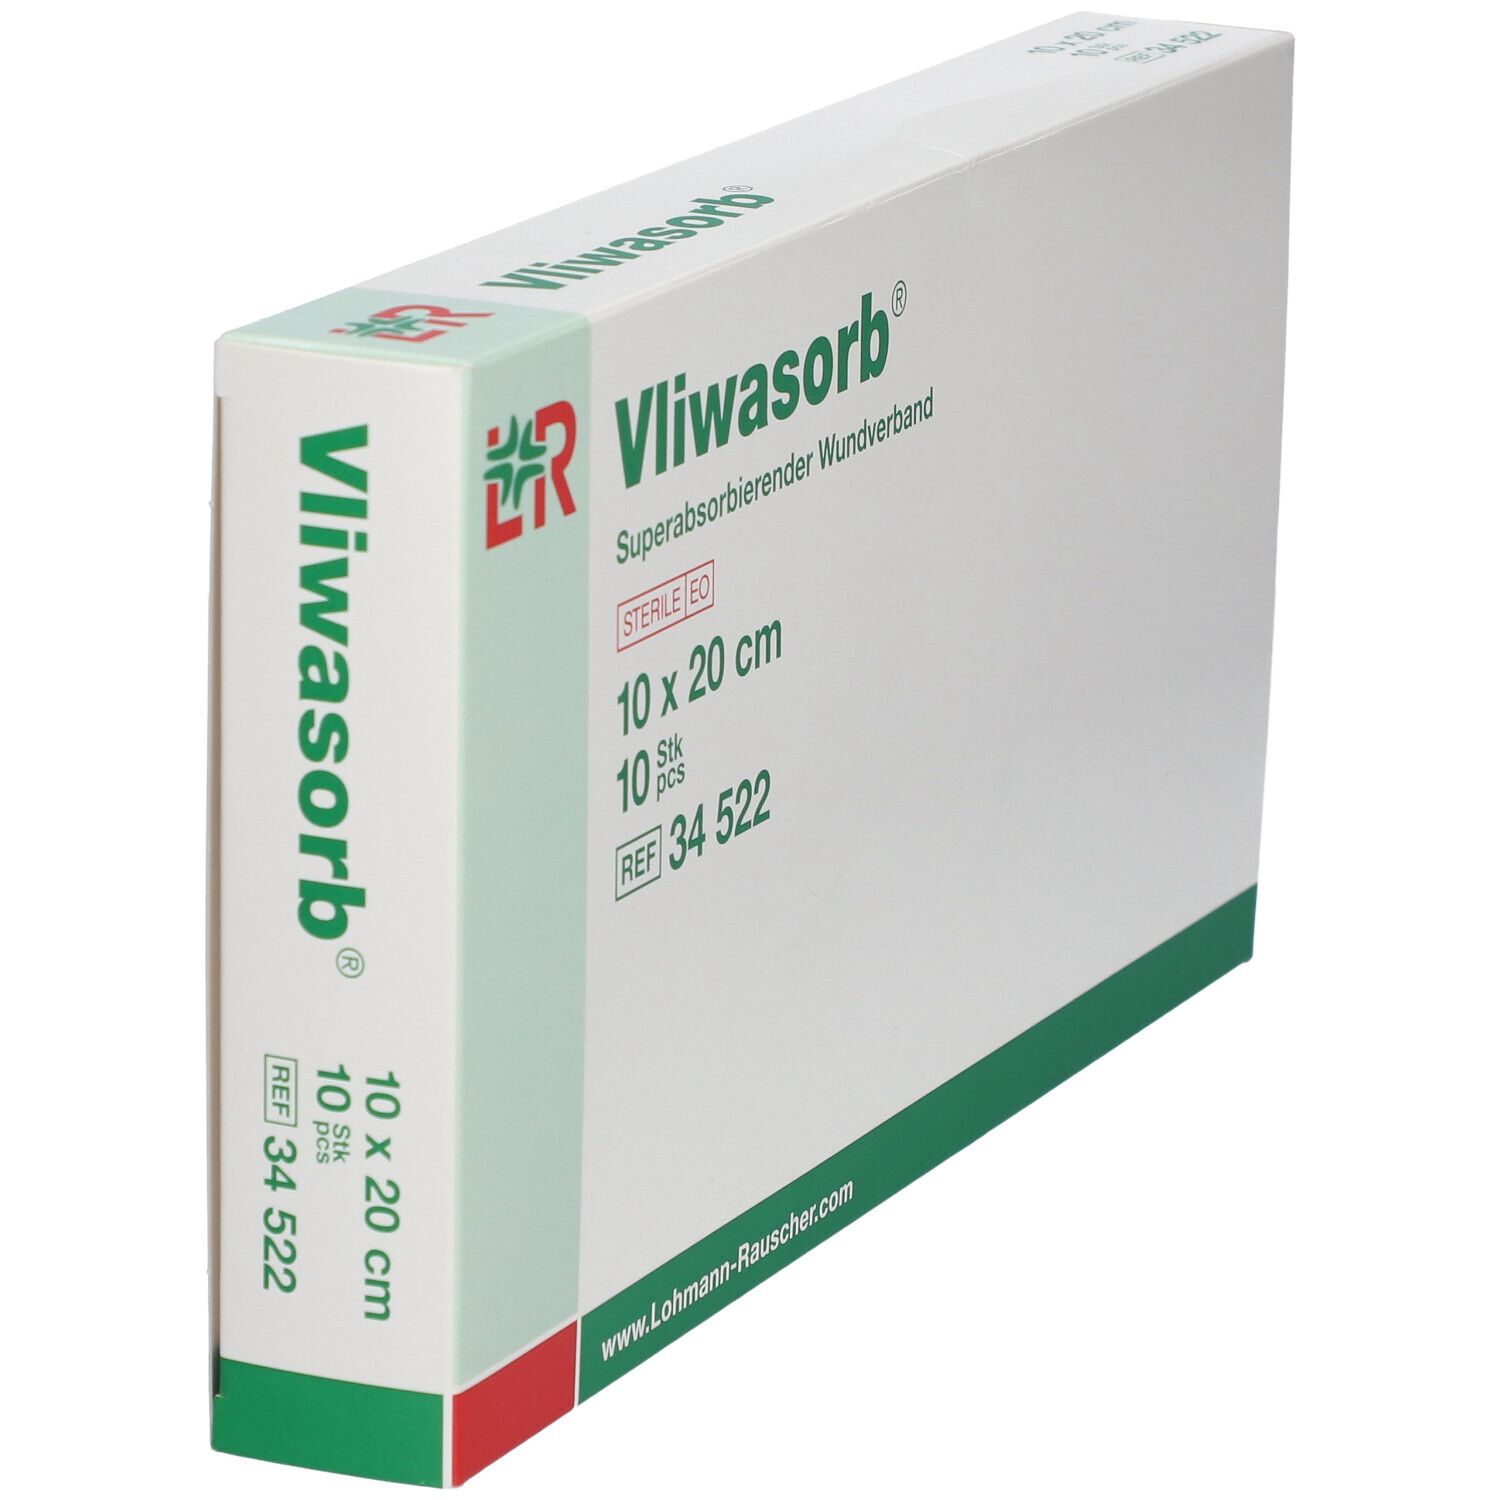 Vliwasorb® superabsorbierender Wundverband 10 x 20 cm steril